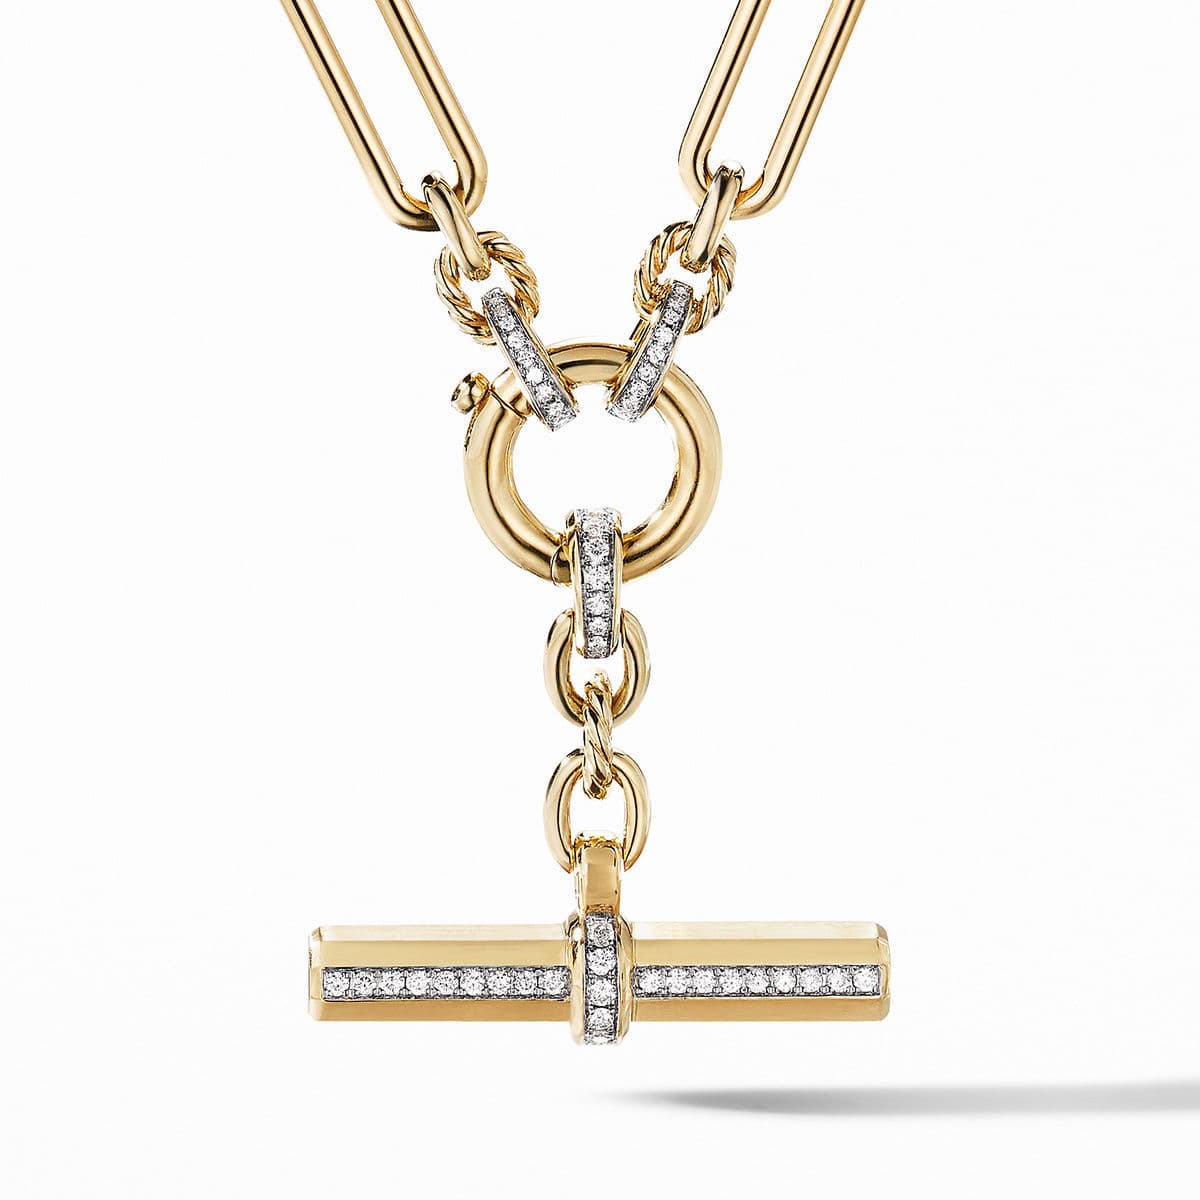 David Yurman Lexington Toggle Necklace in 18k Yellow Gold with Diamonds